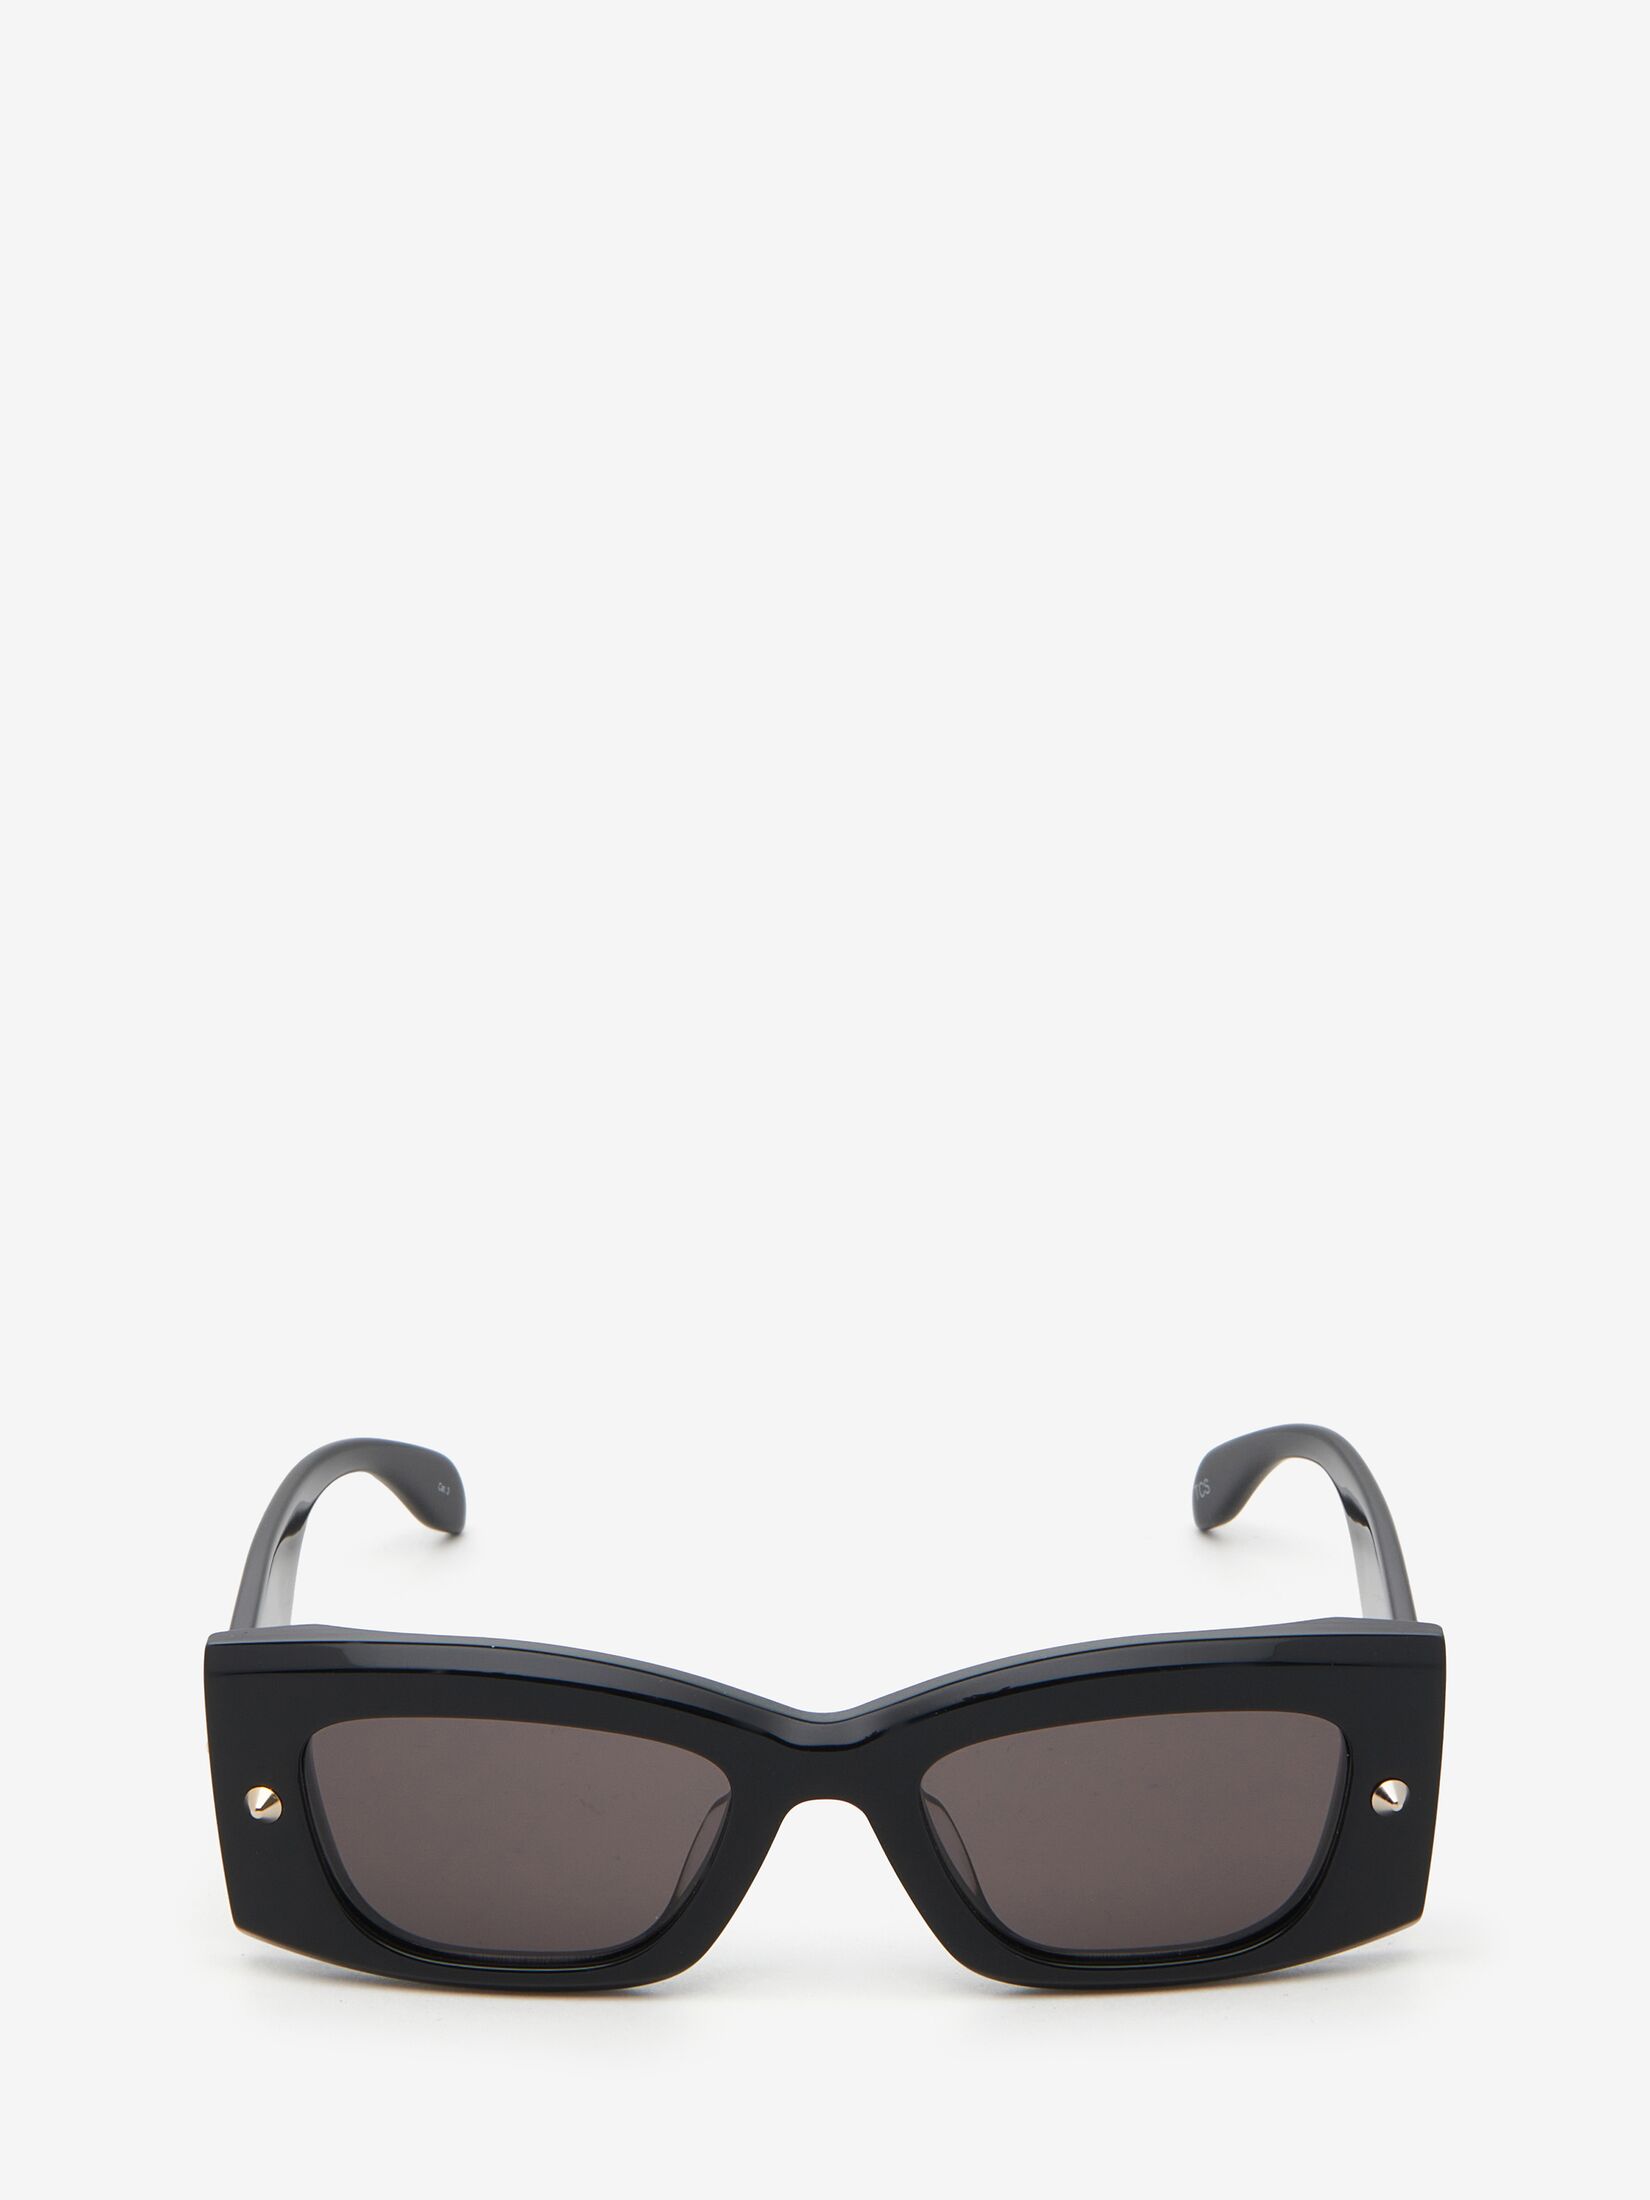 Spike Studs Rectangular Sunglasses in Black/Smoke | Alexander McQueen RO